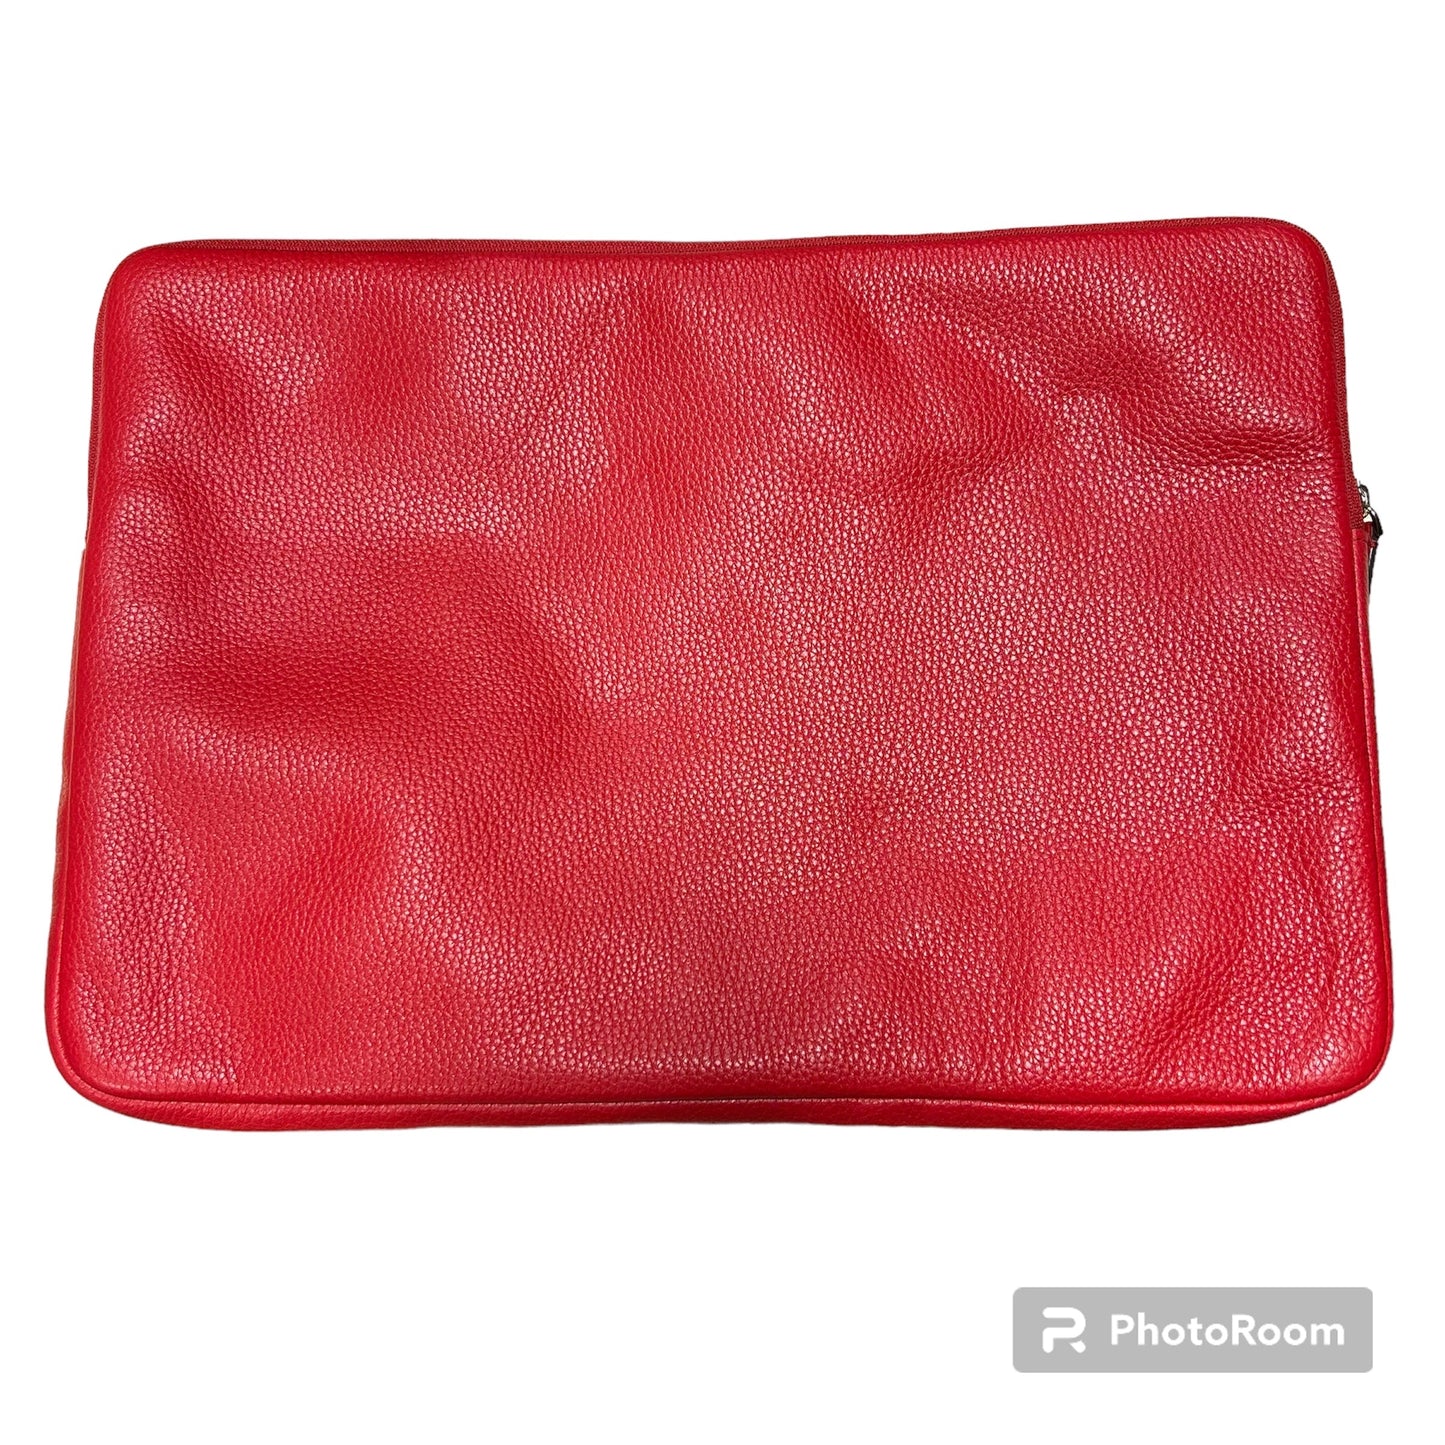 Laptop Bag By Kate Spade  Size: Large